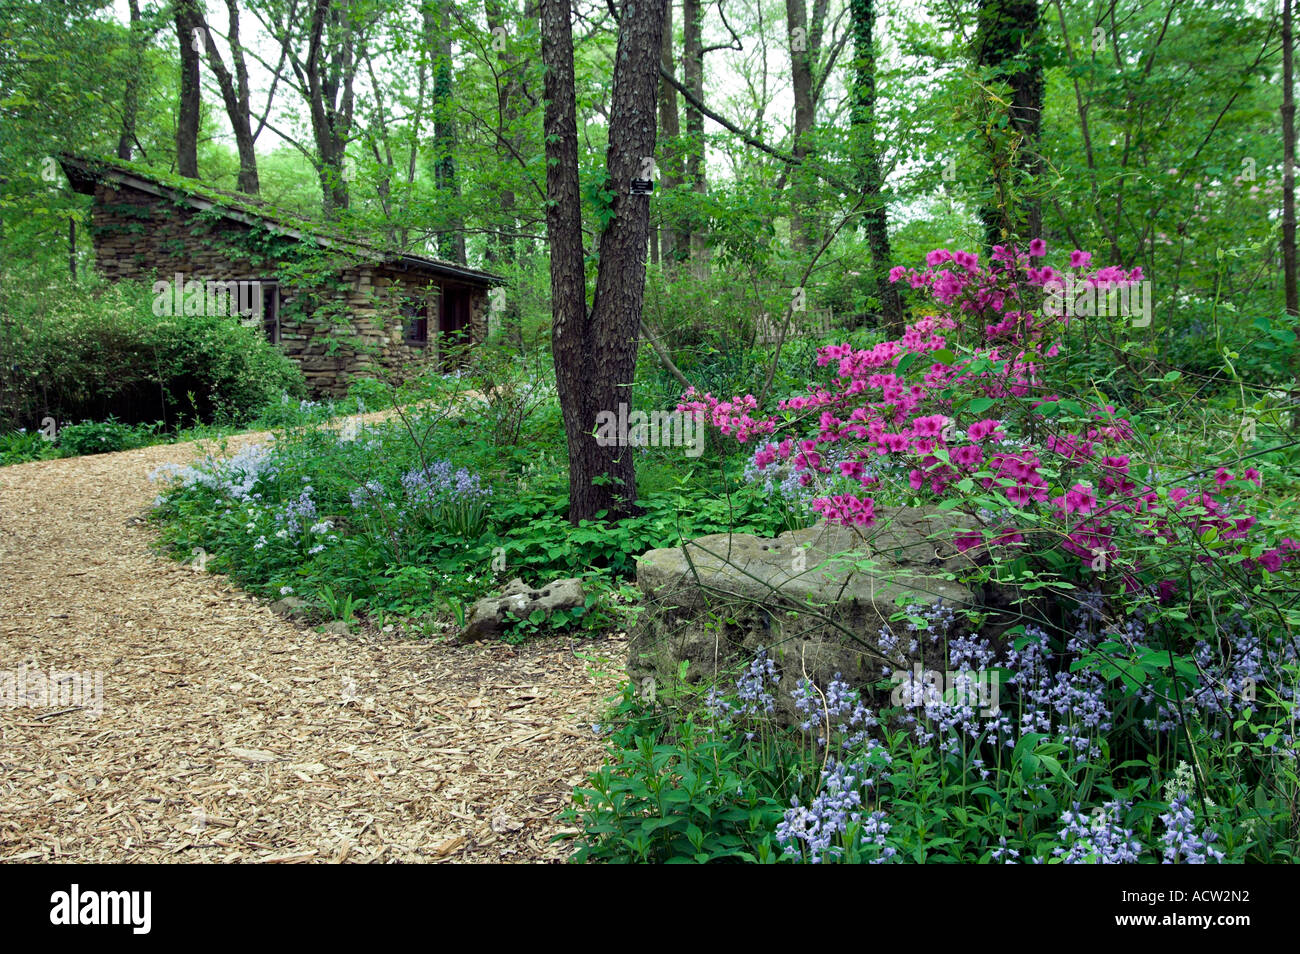 Image Result For Cheekwood Botanical Gardens